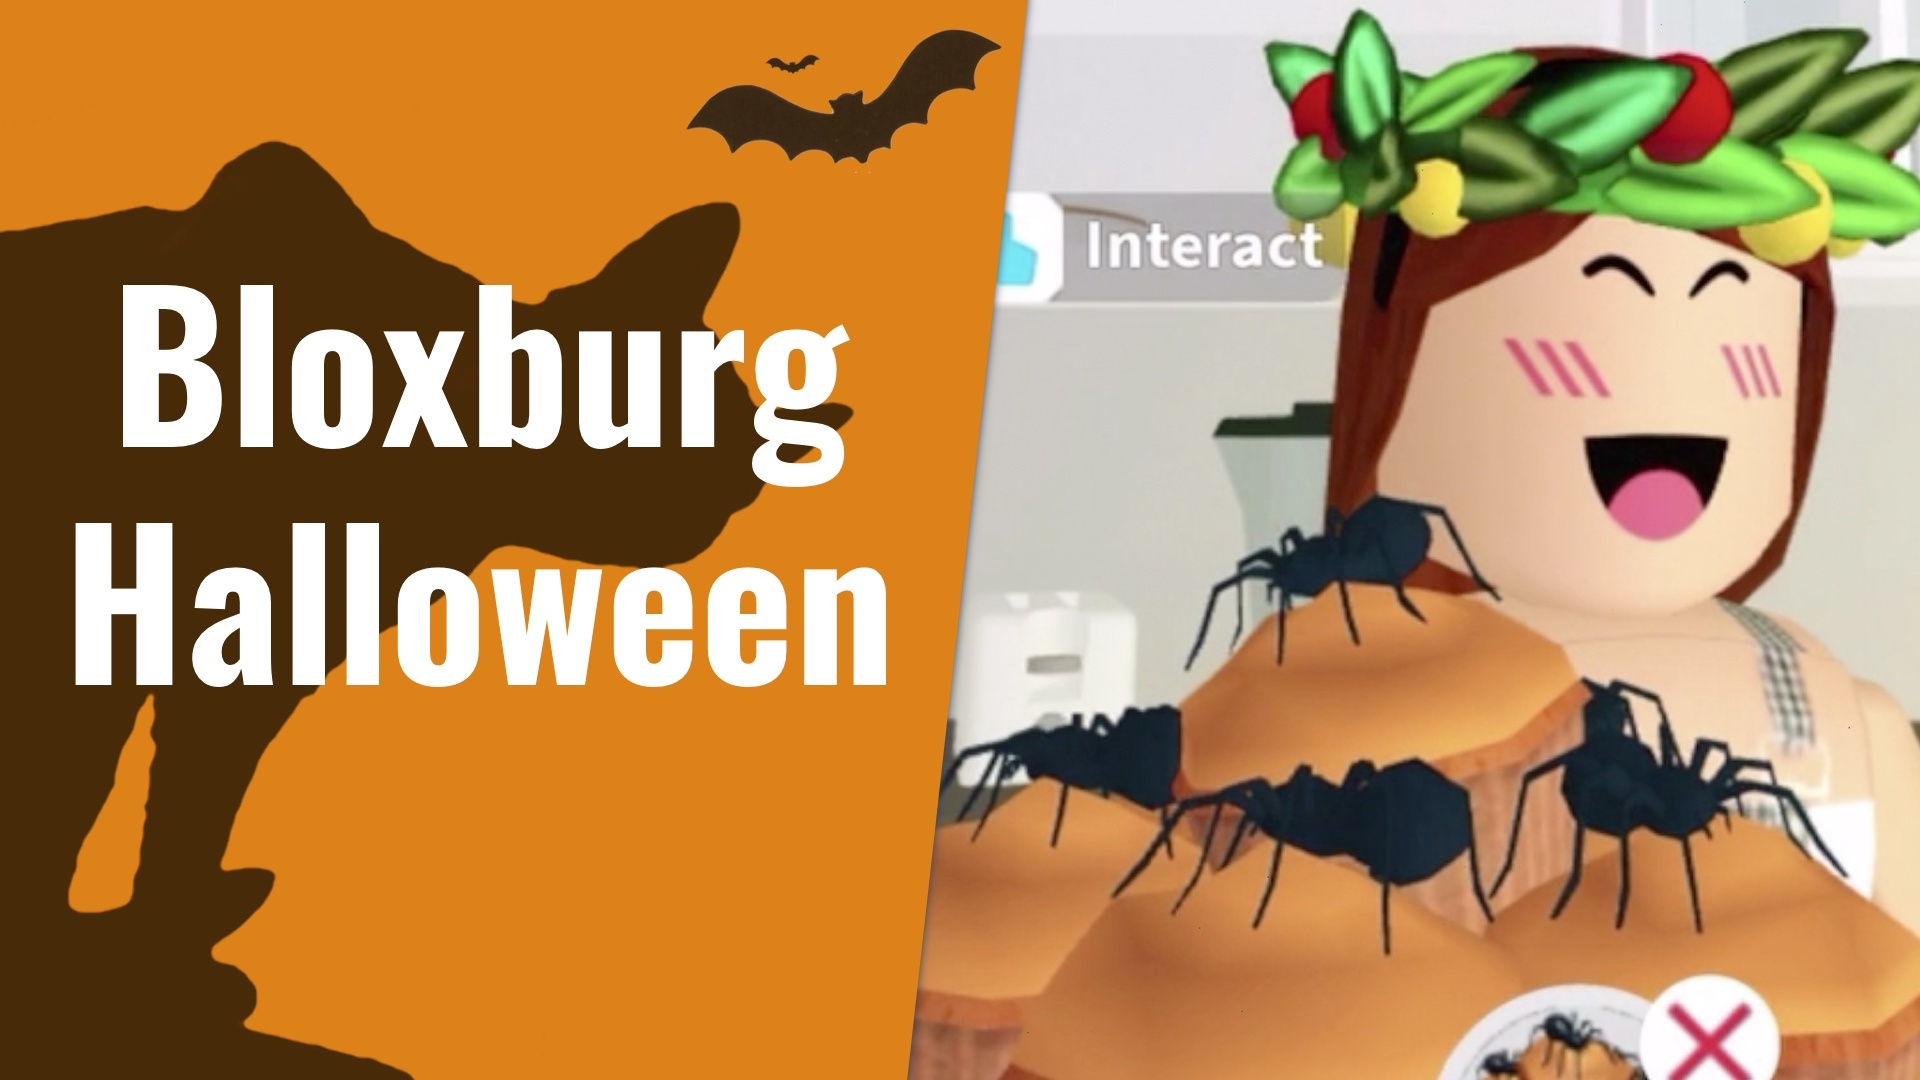 Halloween Update! : r/Bloxburg